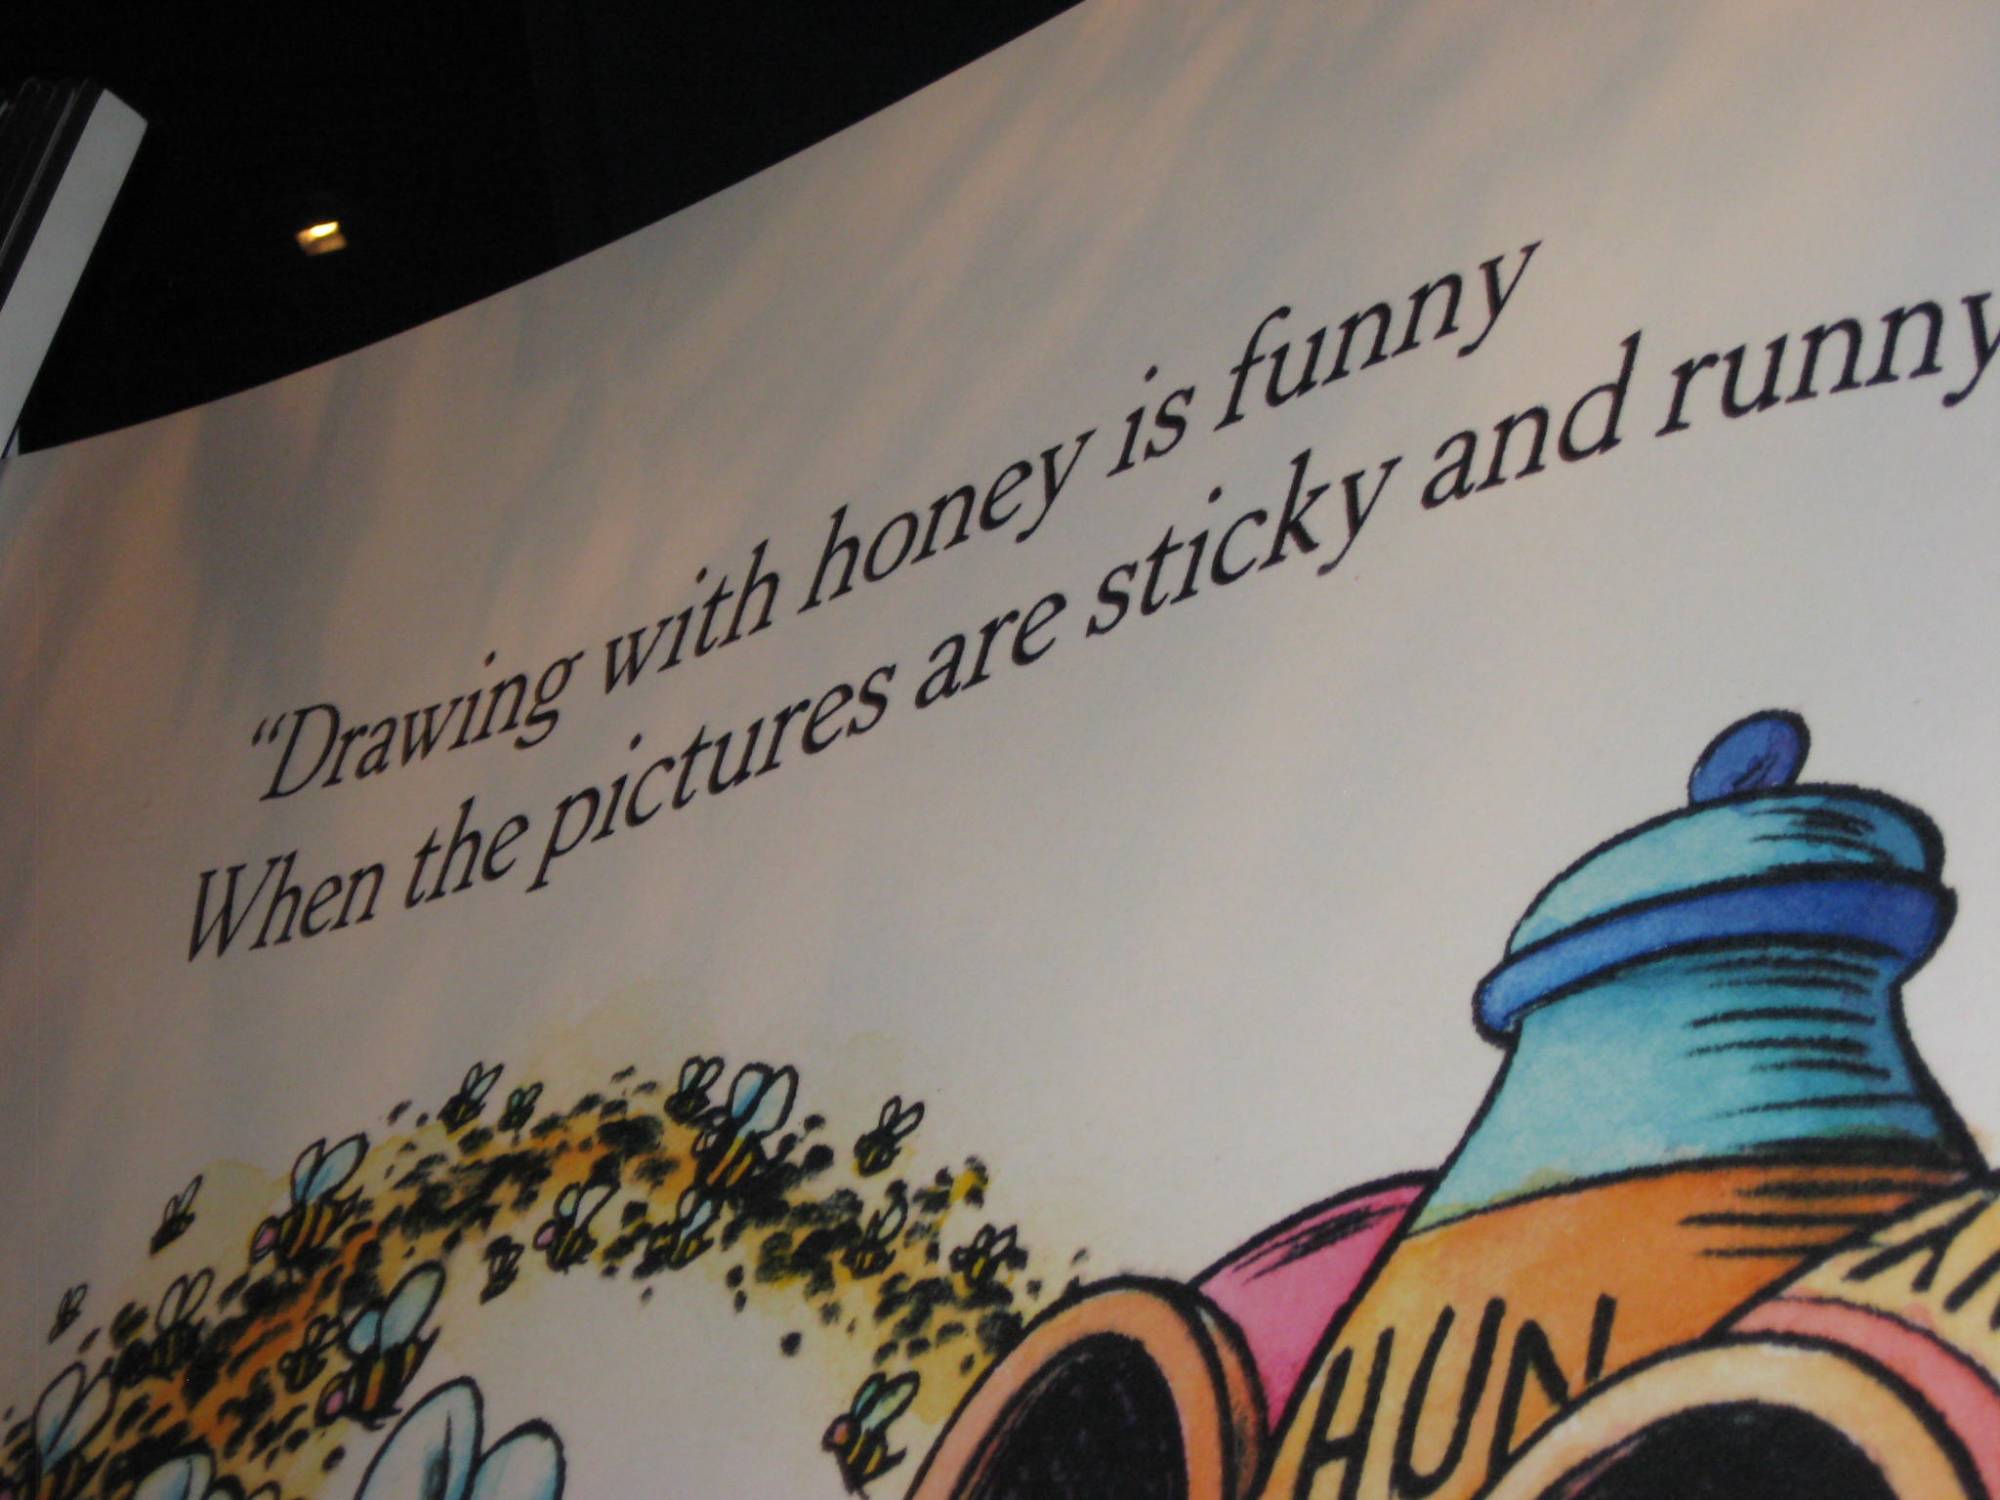 Fantasyland - Many Adventures of Winnie the Pooh